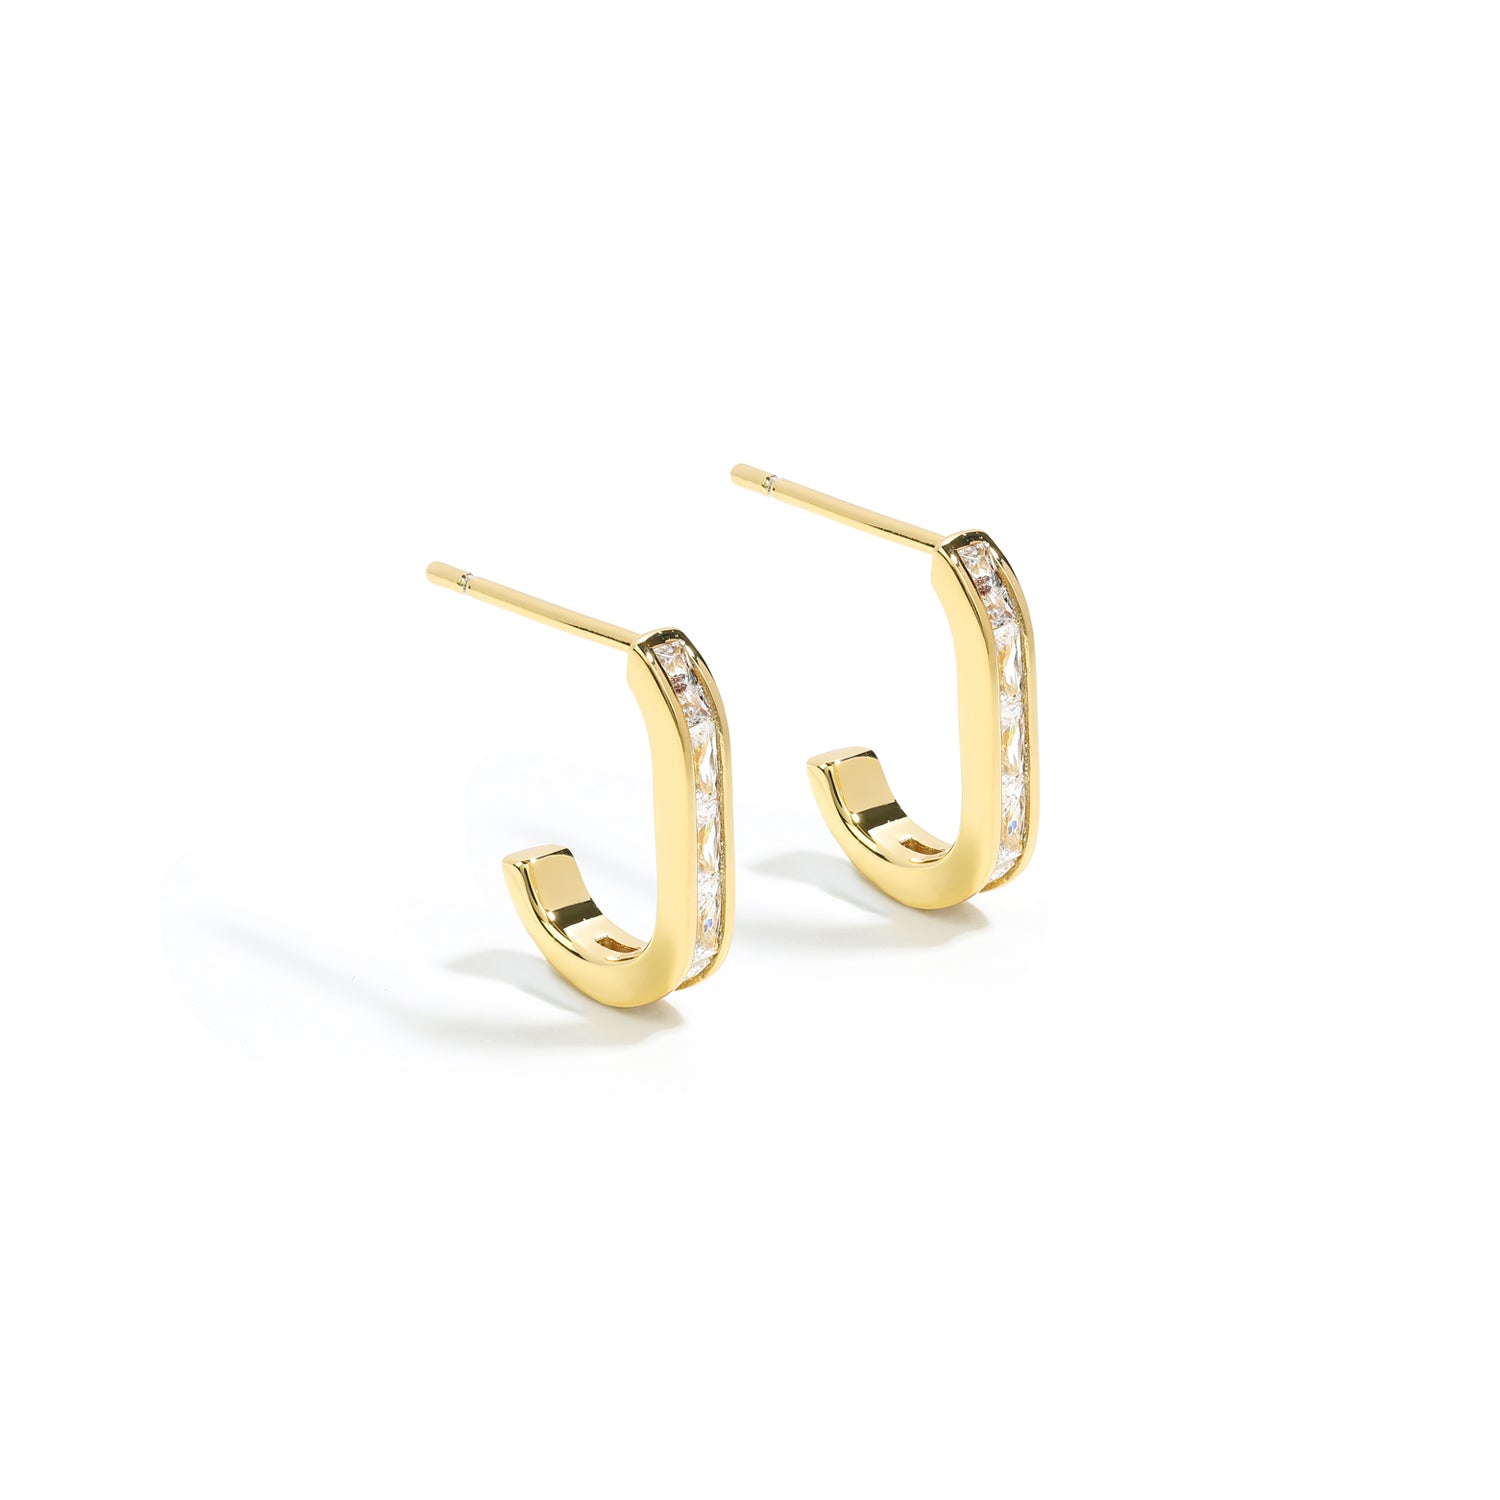 Minimalistic yet bold earrings. Gold stud hoops with cubic zircona stones